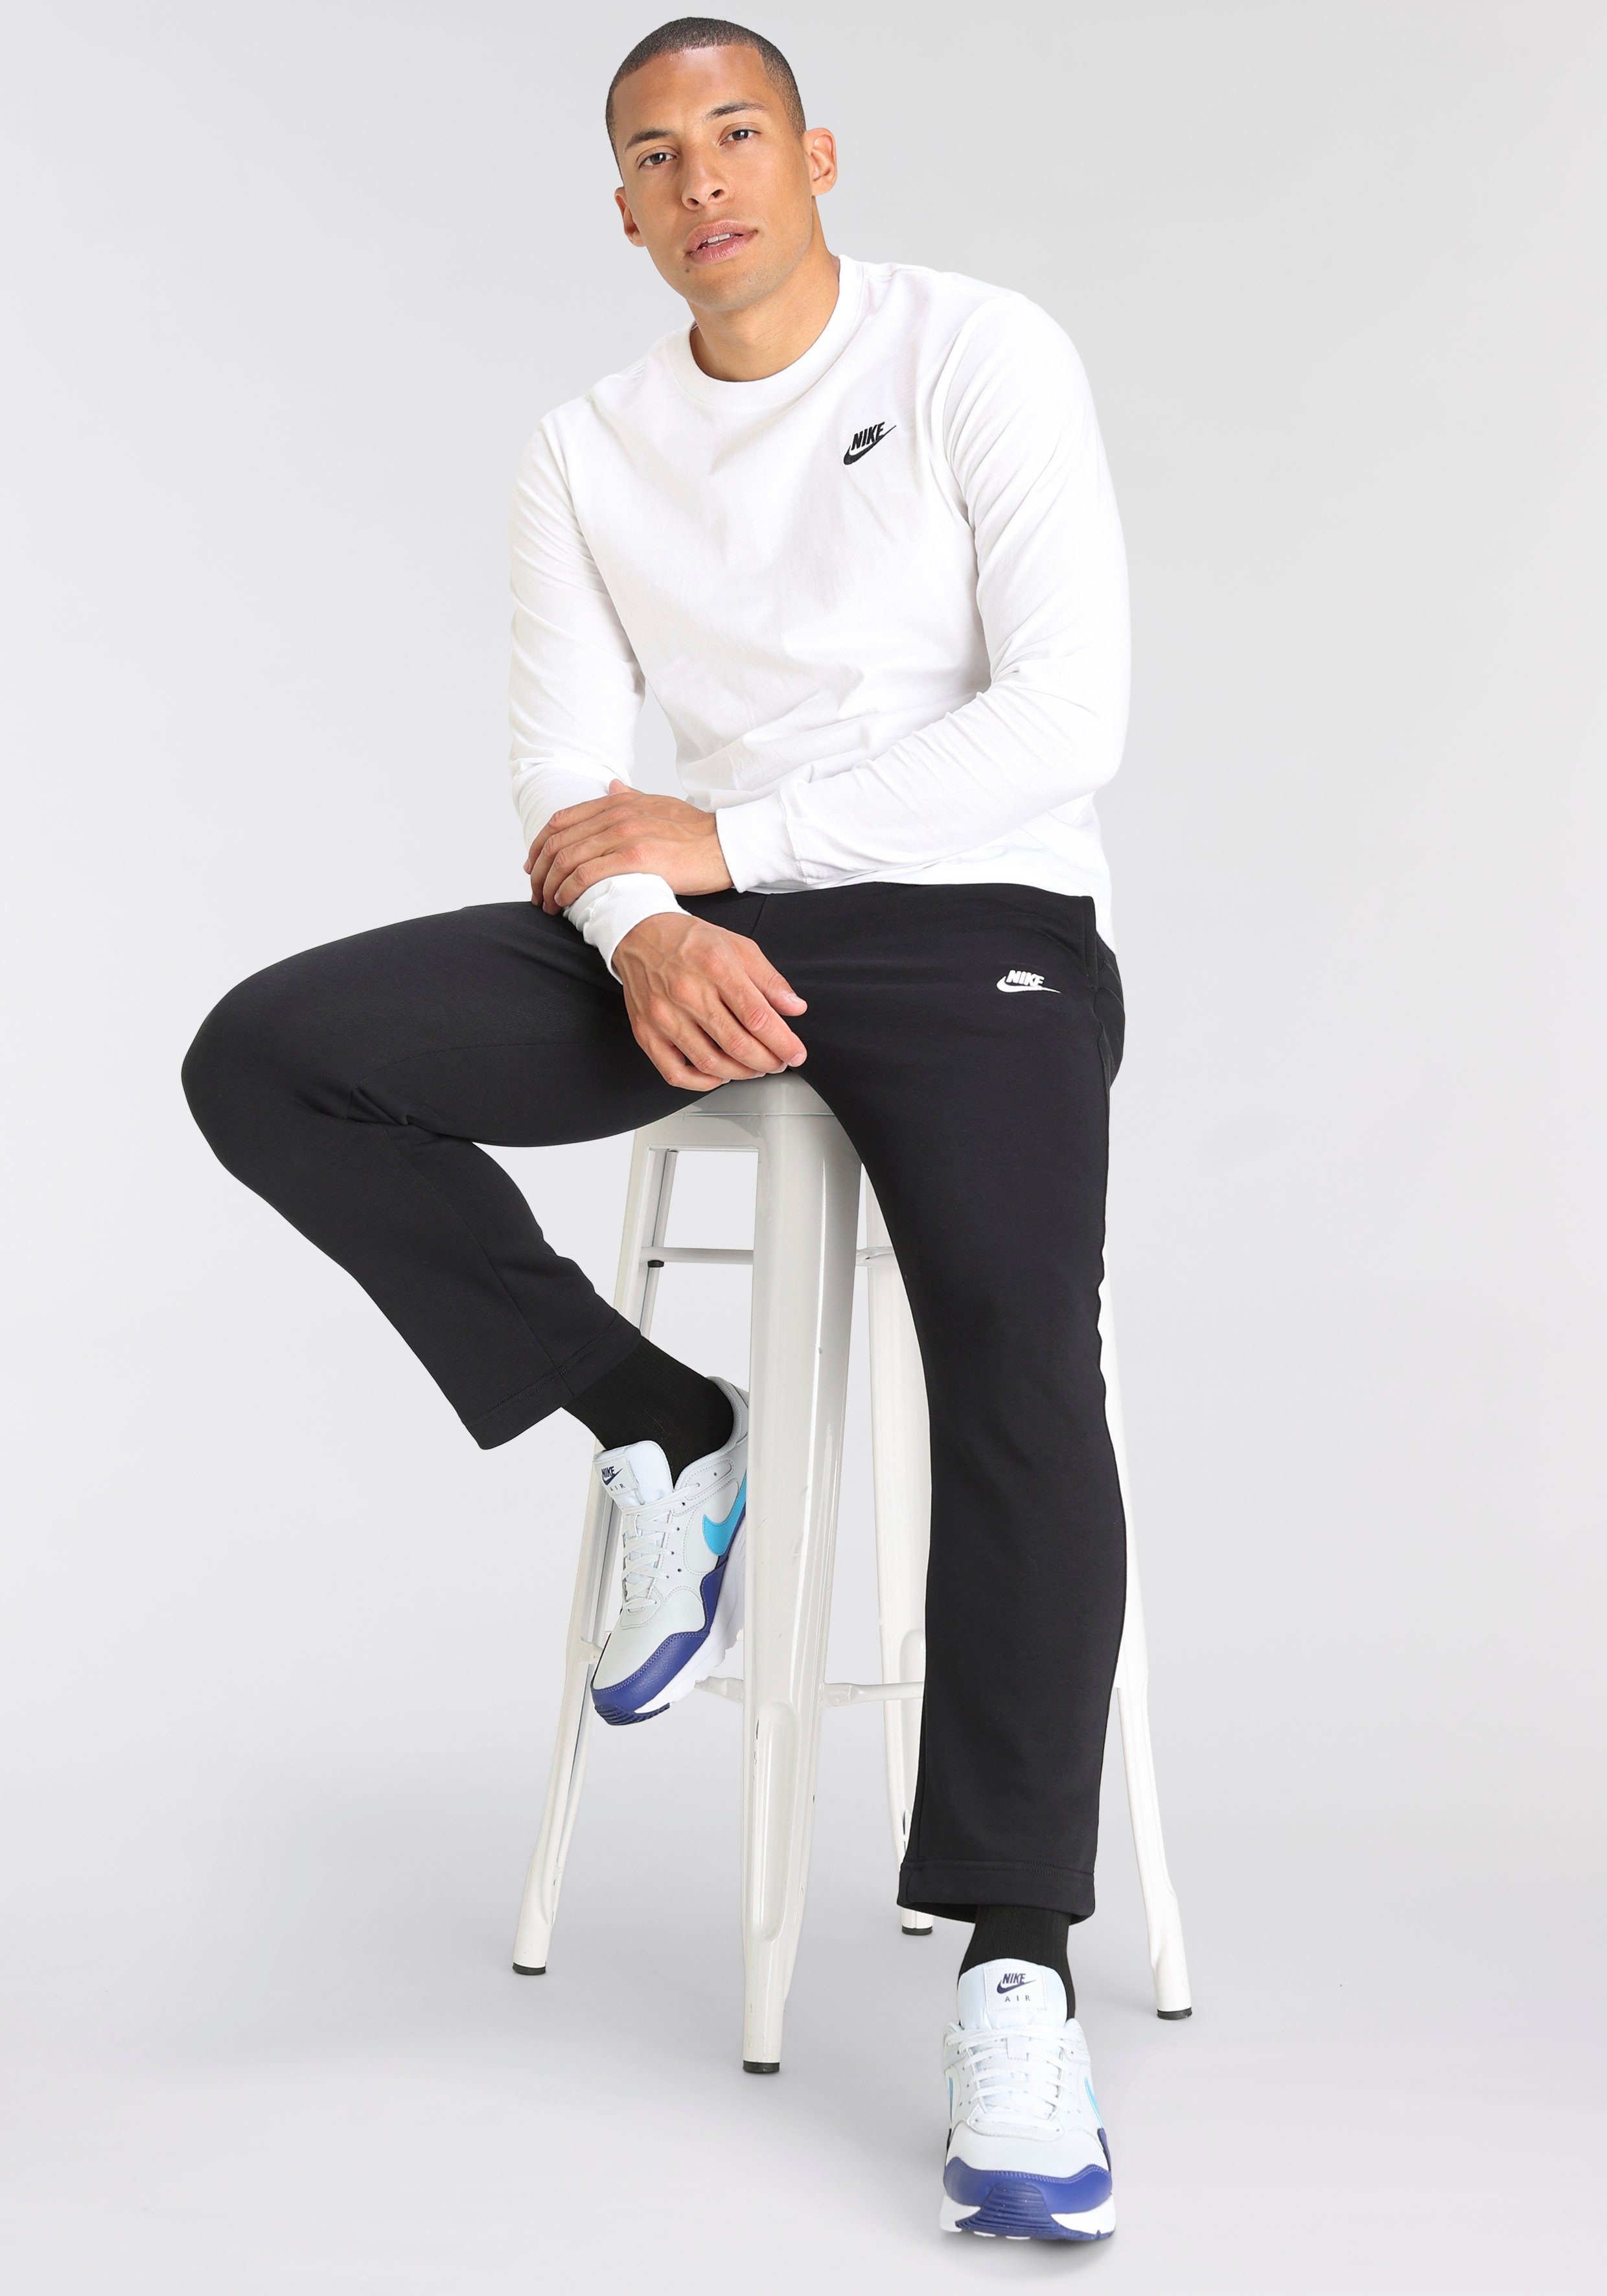 Nike Sportswear Langarmshirt MEN'S LONG-SLEEVE T-SHIRT weiß